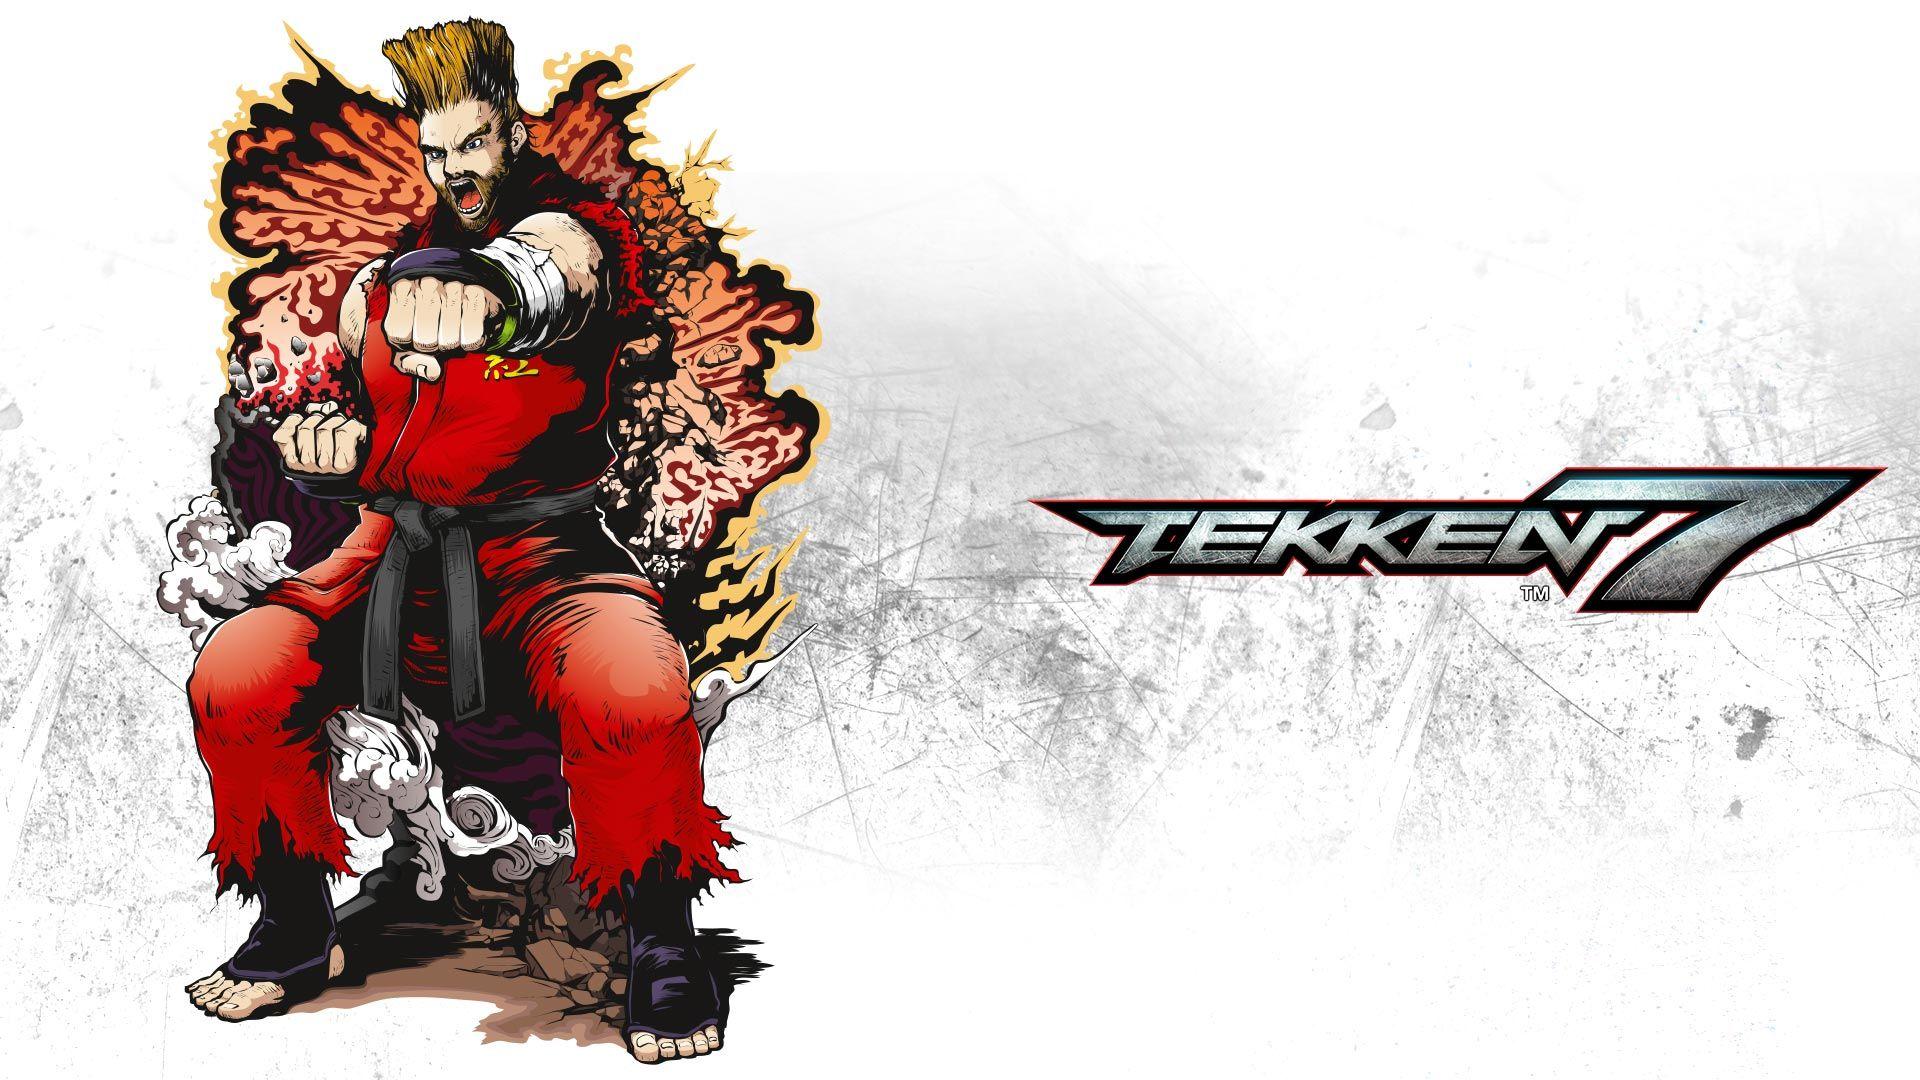 Paul. Wallpaper from Tekken 7